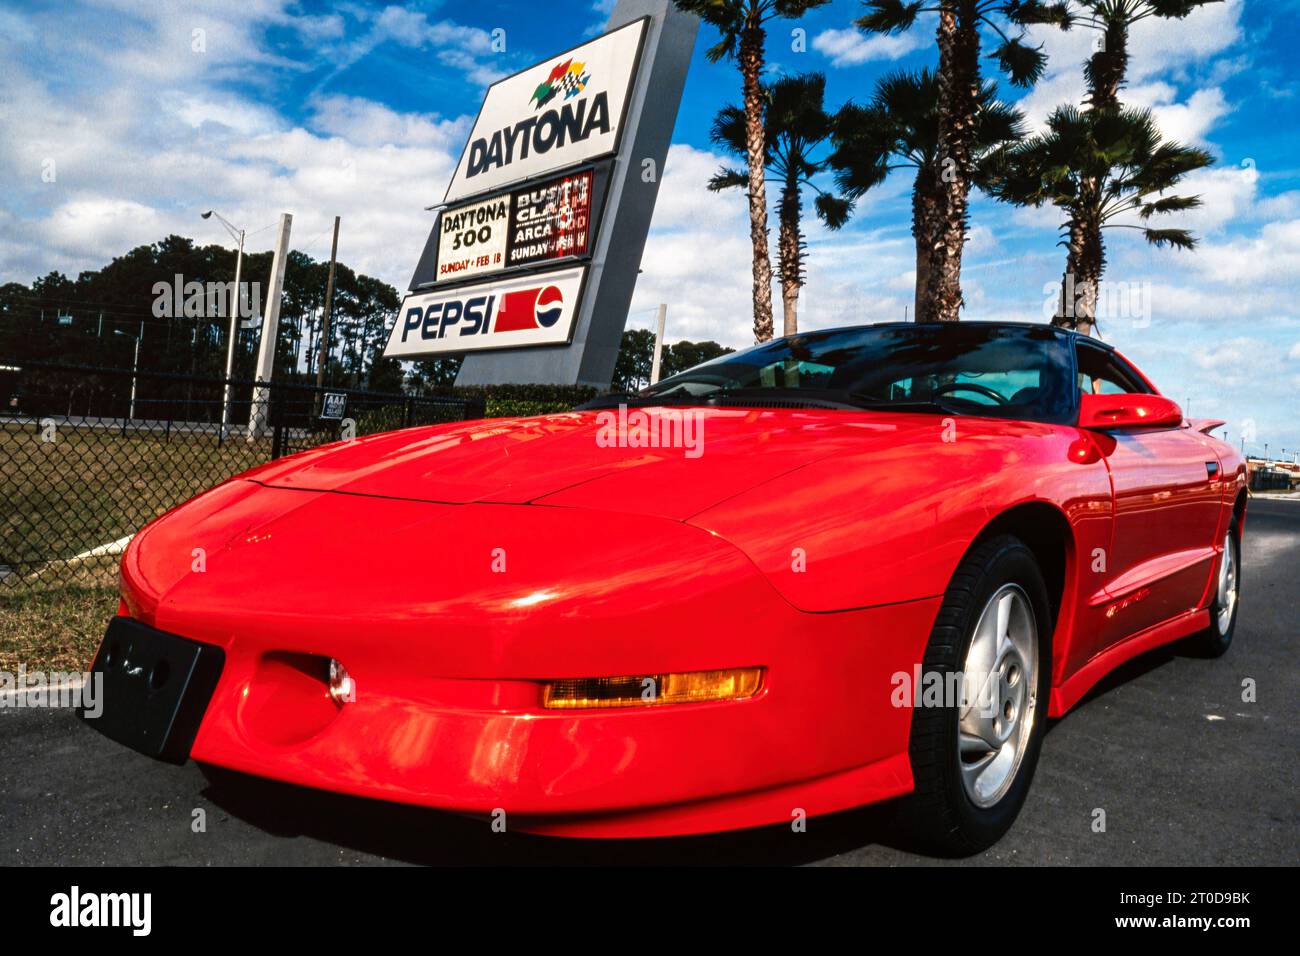 Red Pontiac Firebird Trans Am 1995 series 3 model parked on the sand at Daytona Beach, Florida, USA Stock Photo